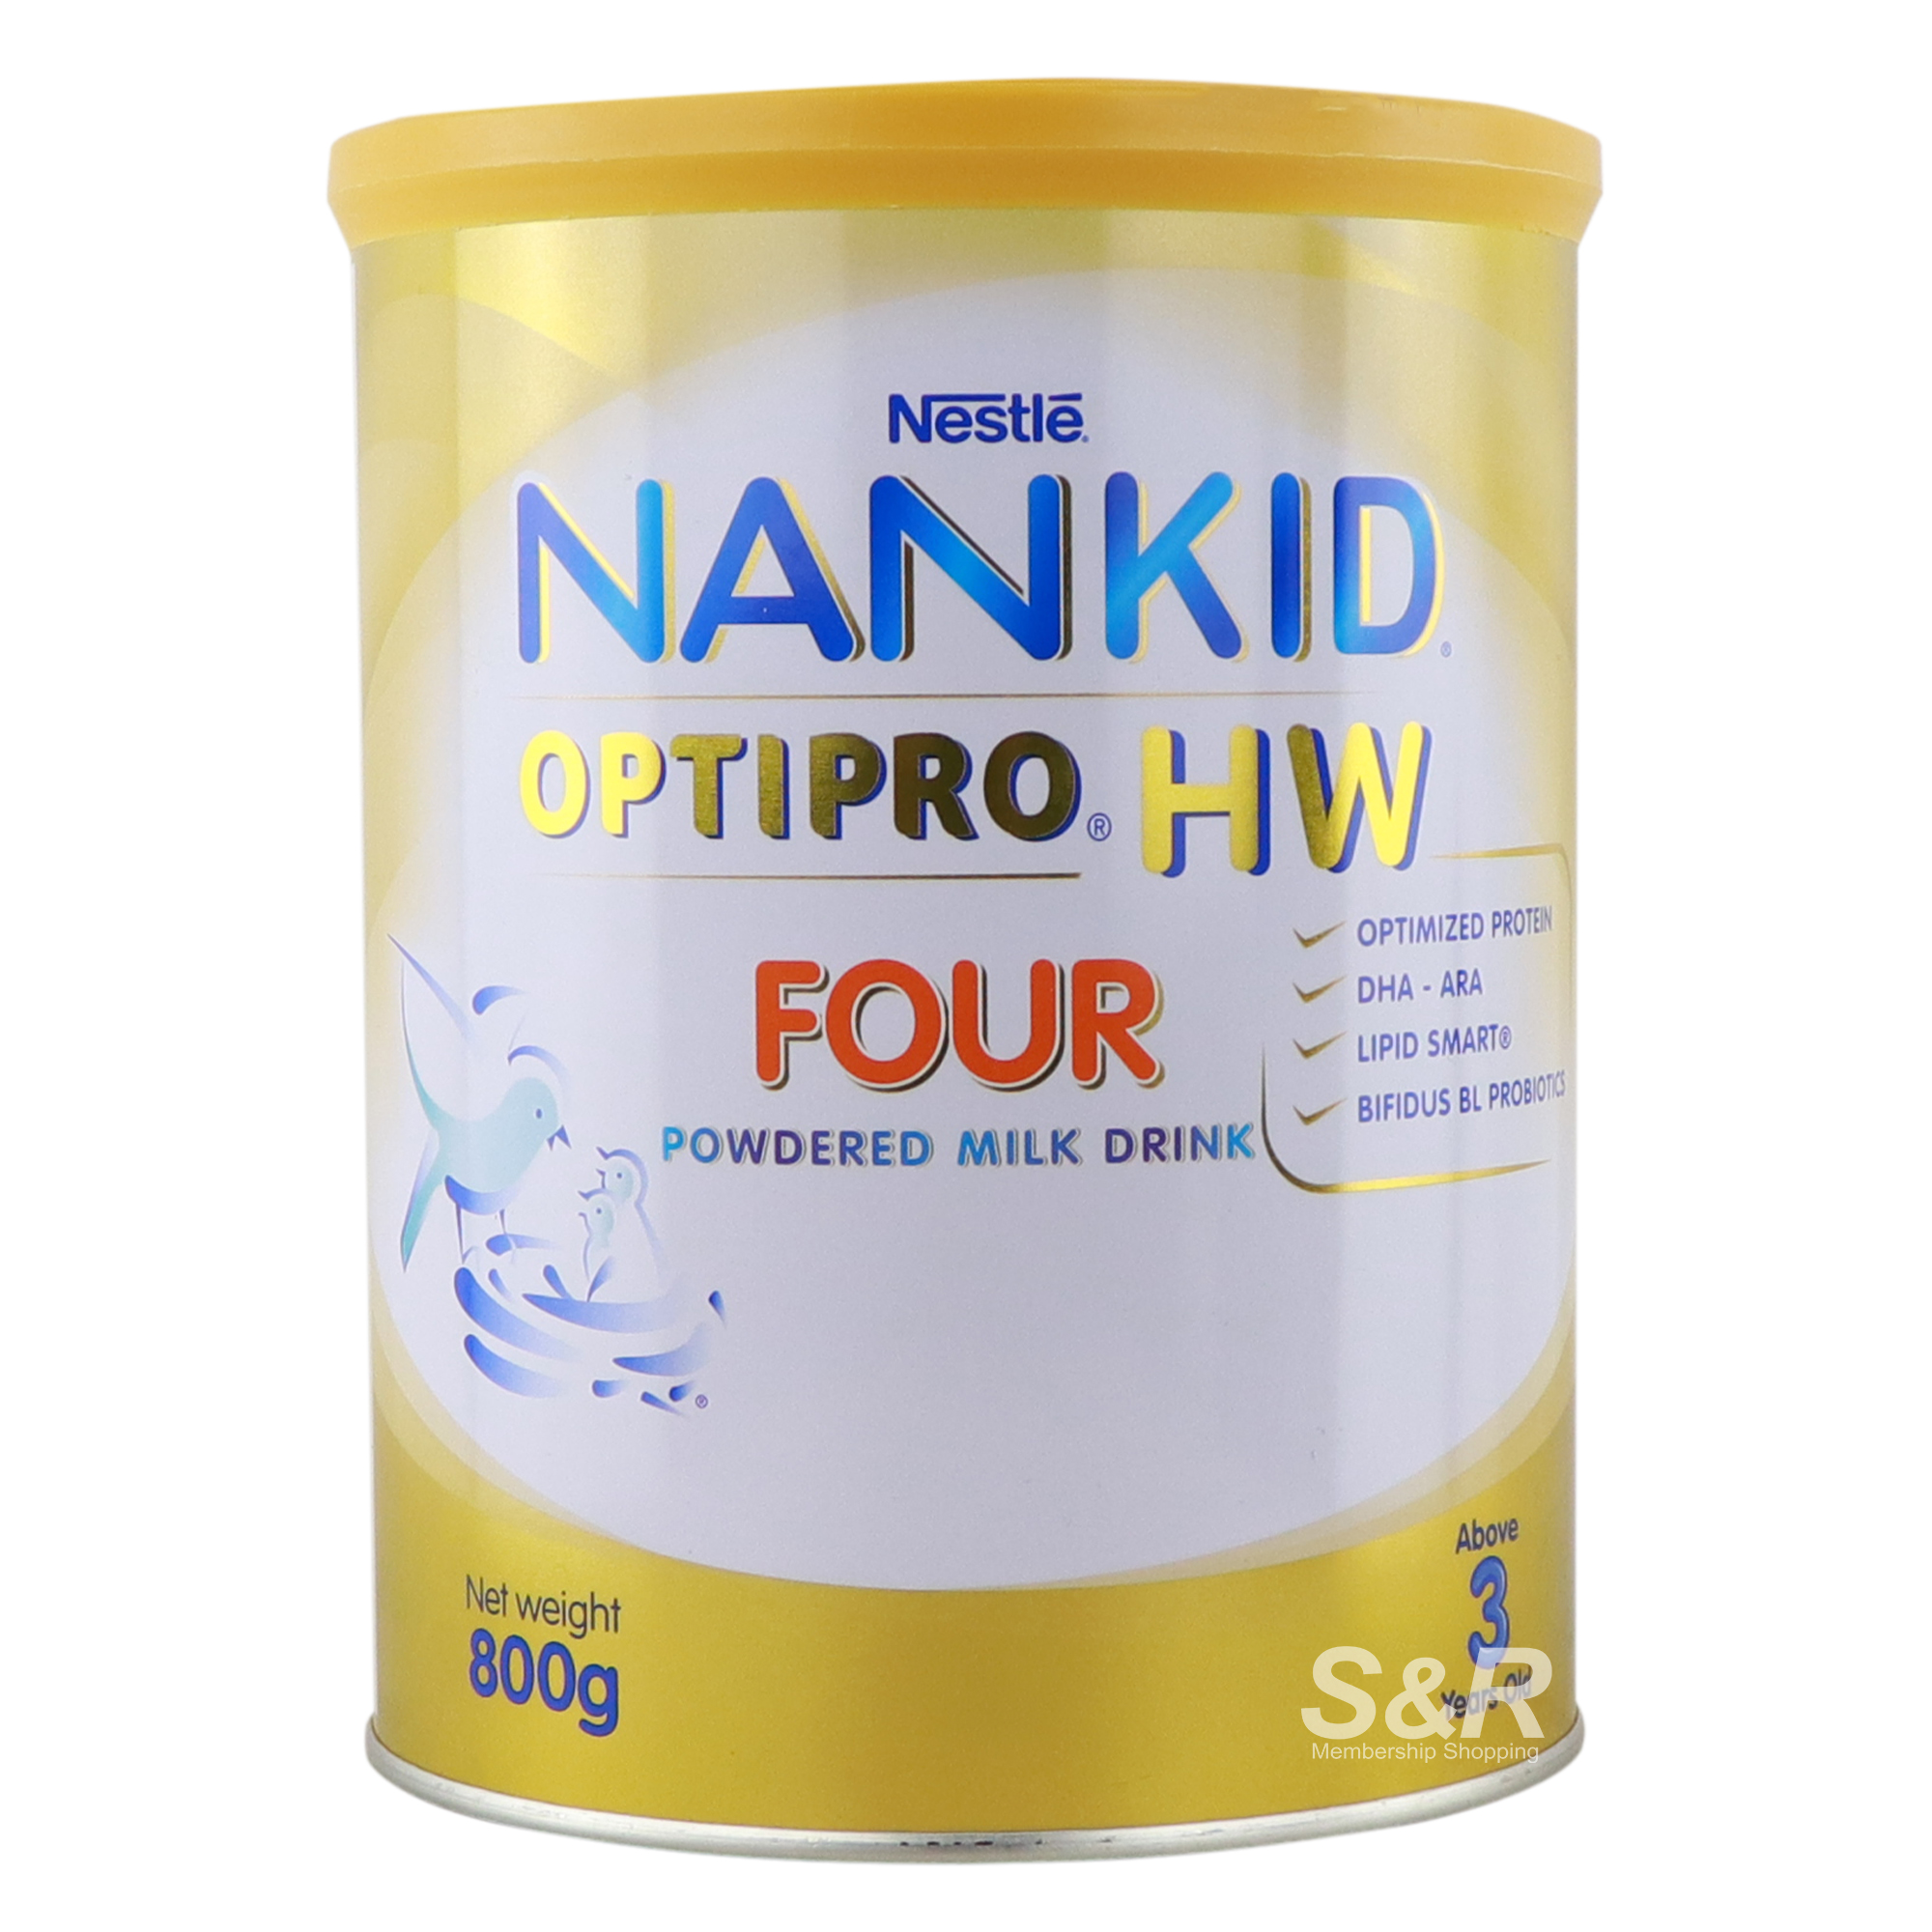 Nankid Optipro HW Four Powdered Milk Drink 800g